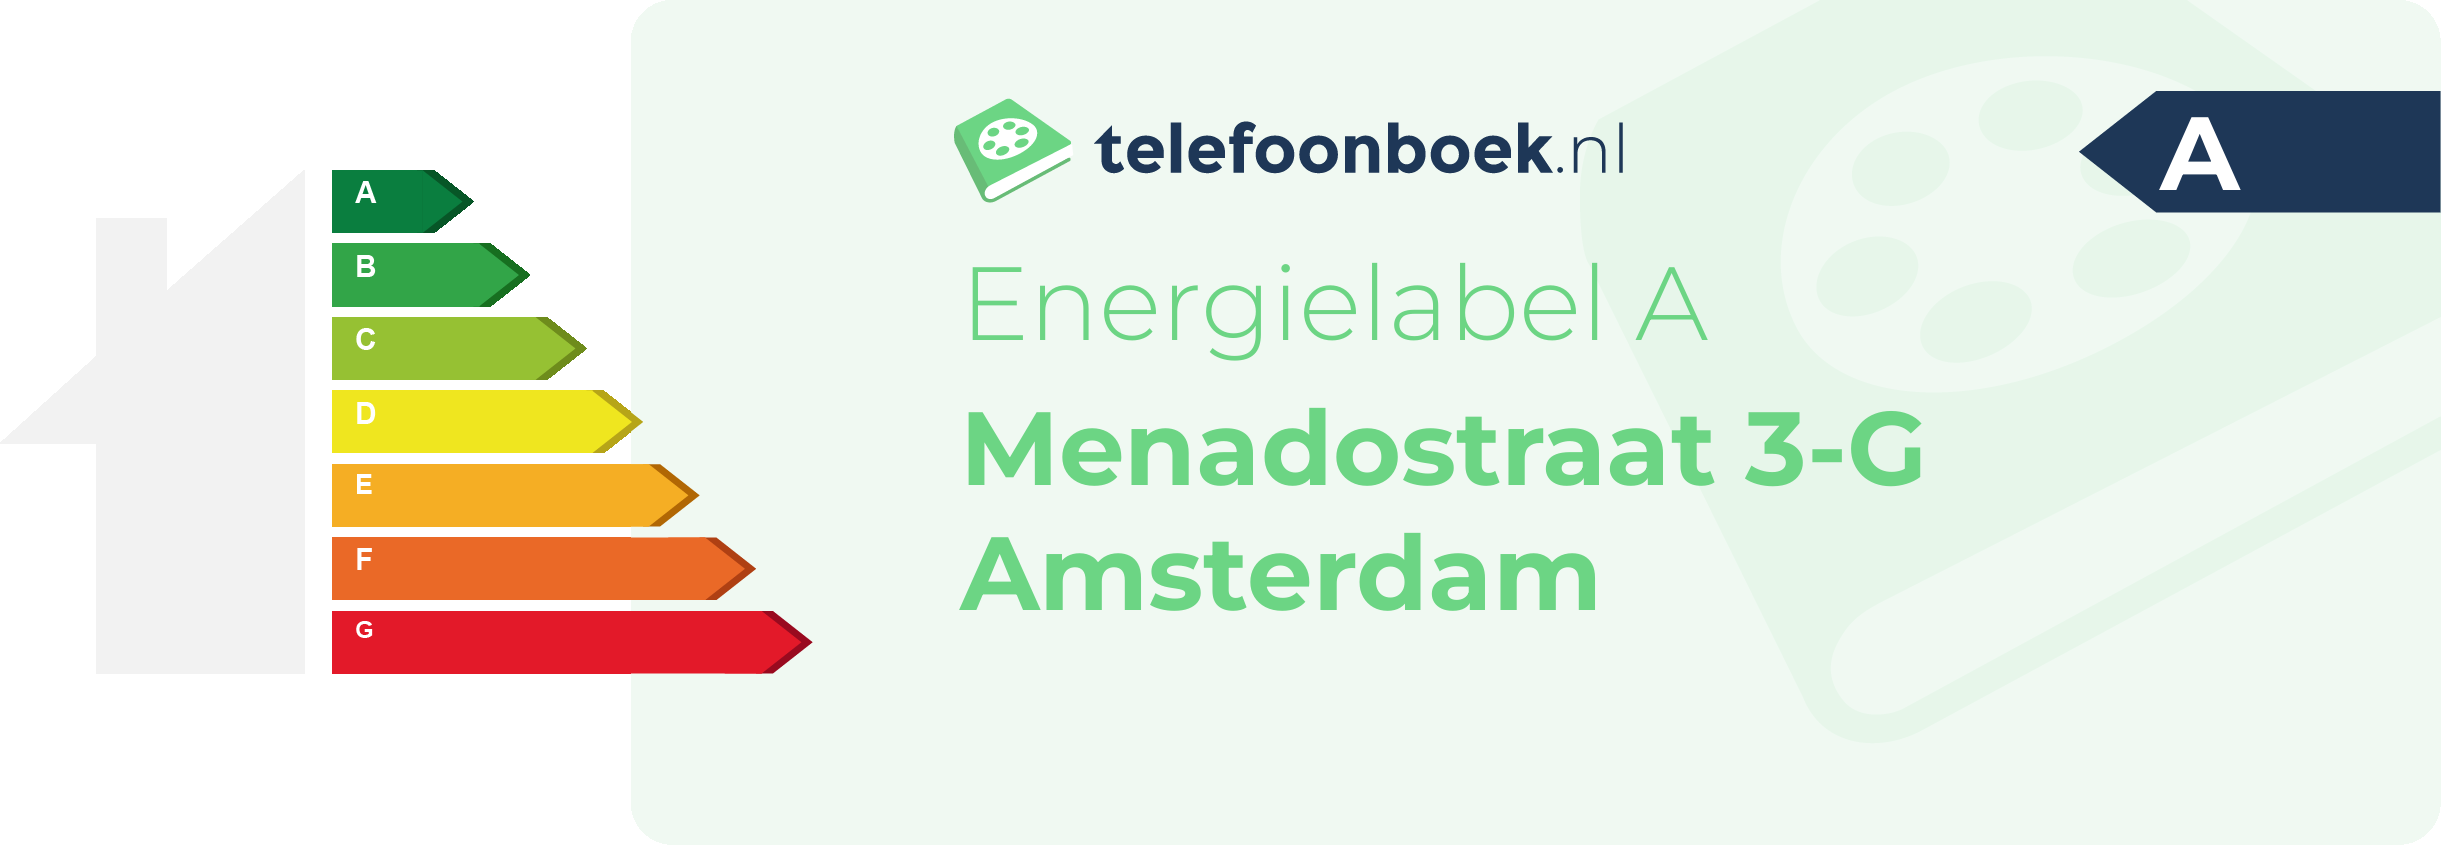 Energielabel Menadostraat 3-G Amsterdam